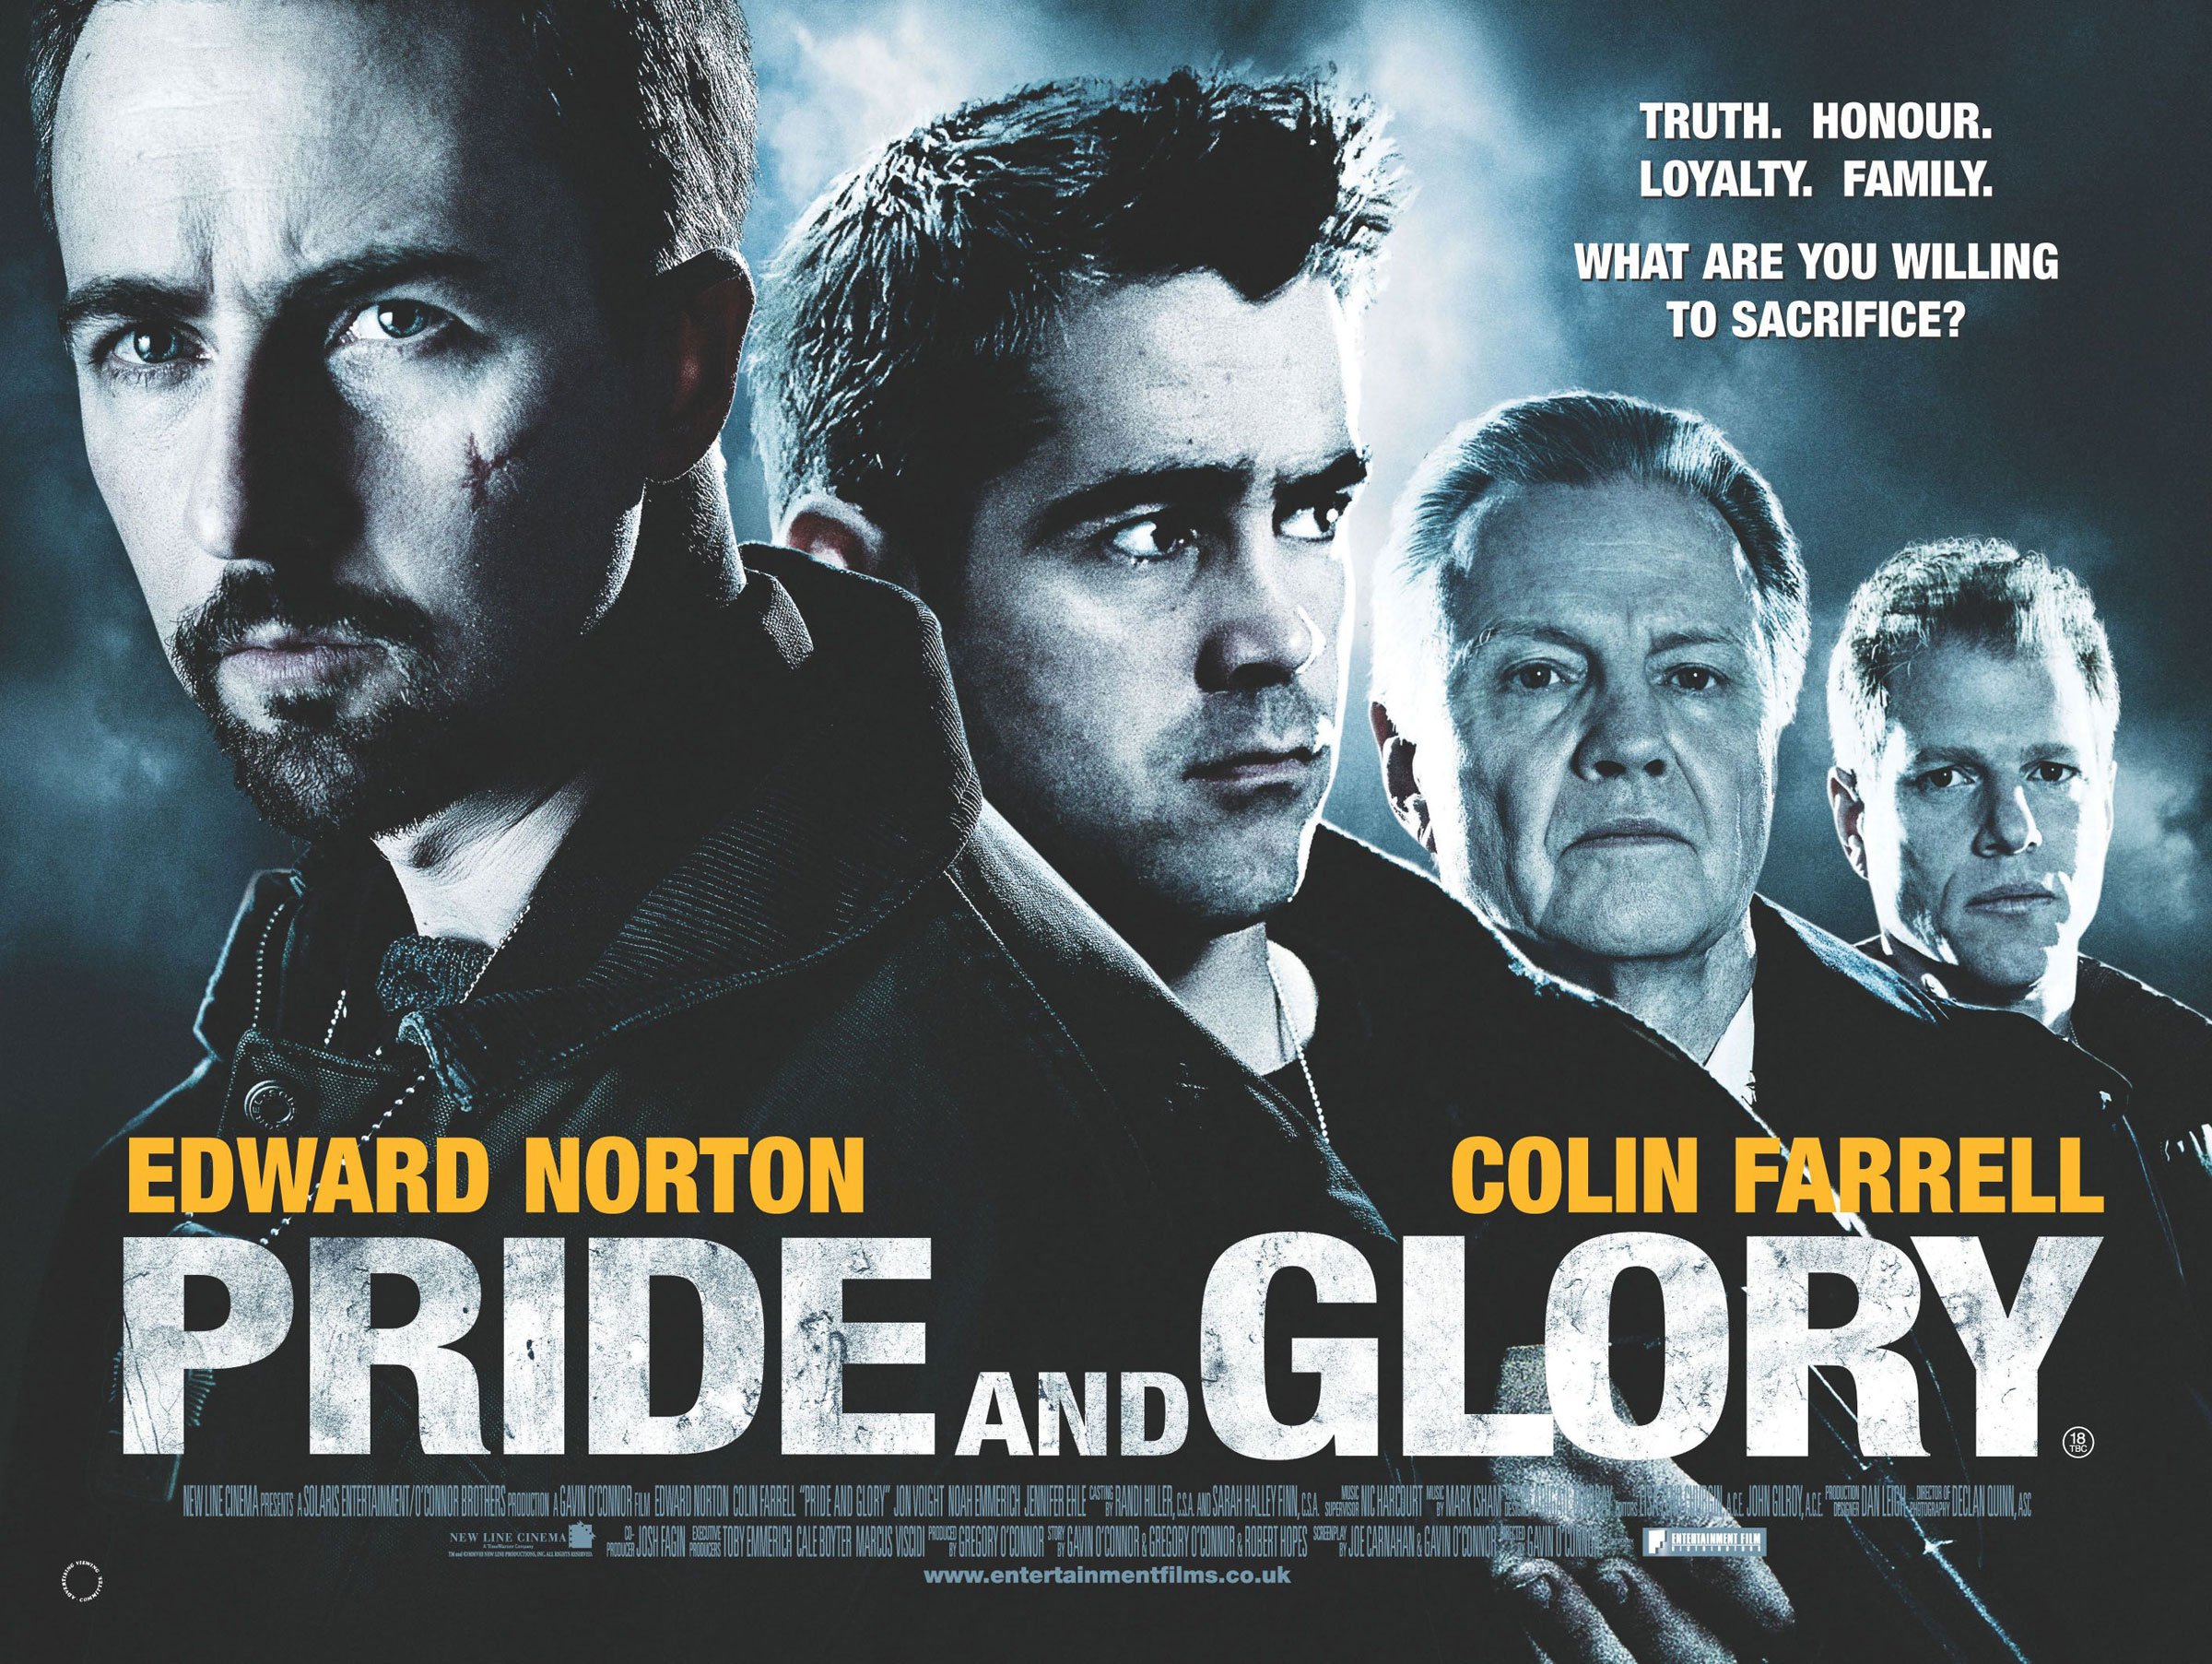 Pride And Glory HD wallpapers, Desktop wallpaper - most viewed